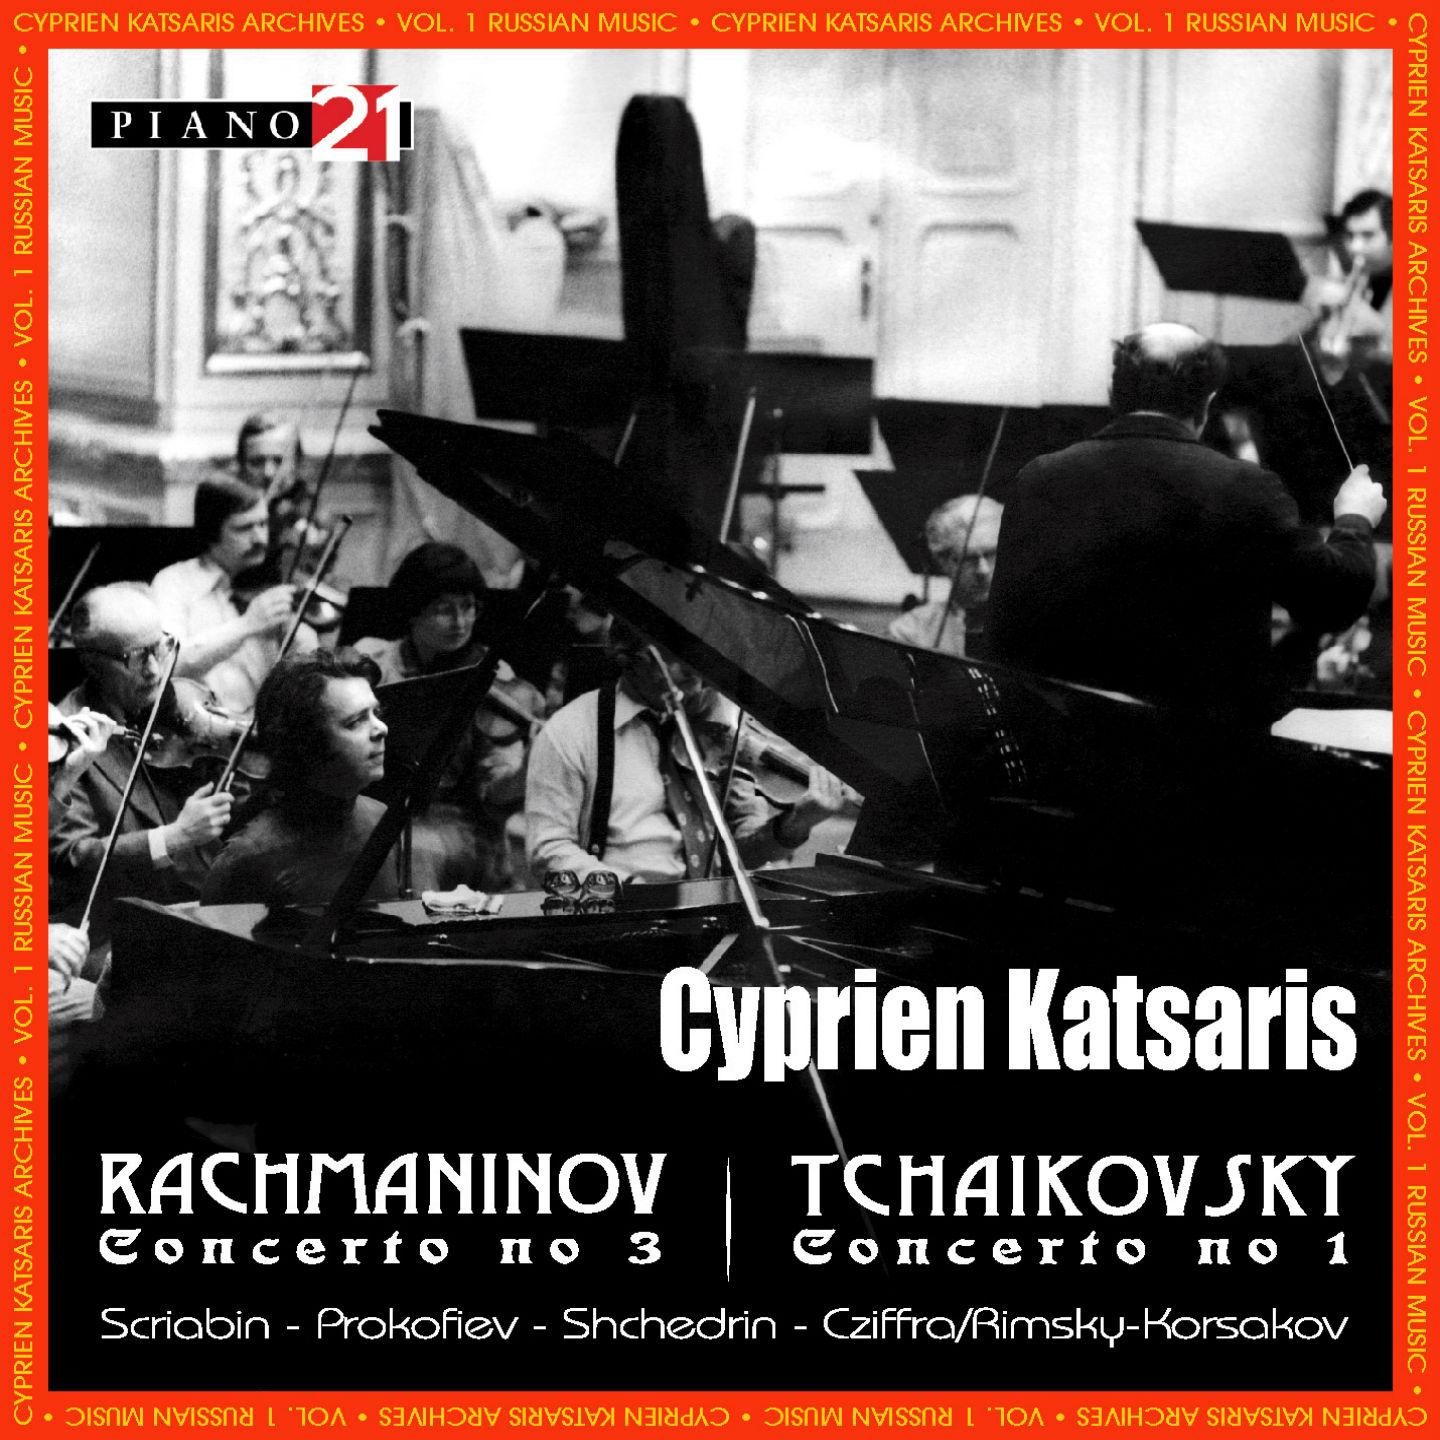 Russian Music - Vol. 1: Rachmaninoff (Cyprien Katsaris Archives)